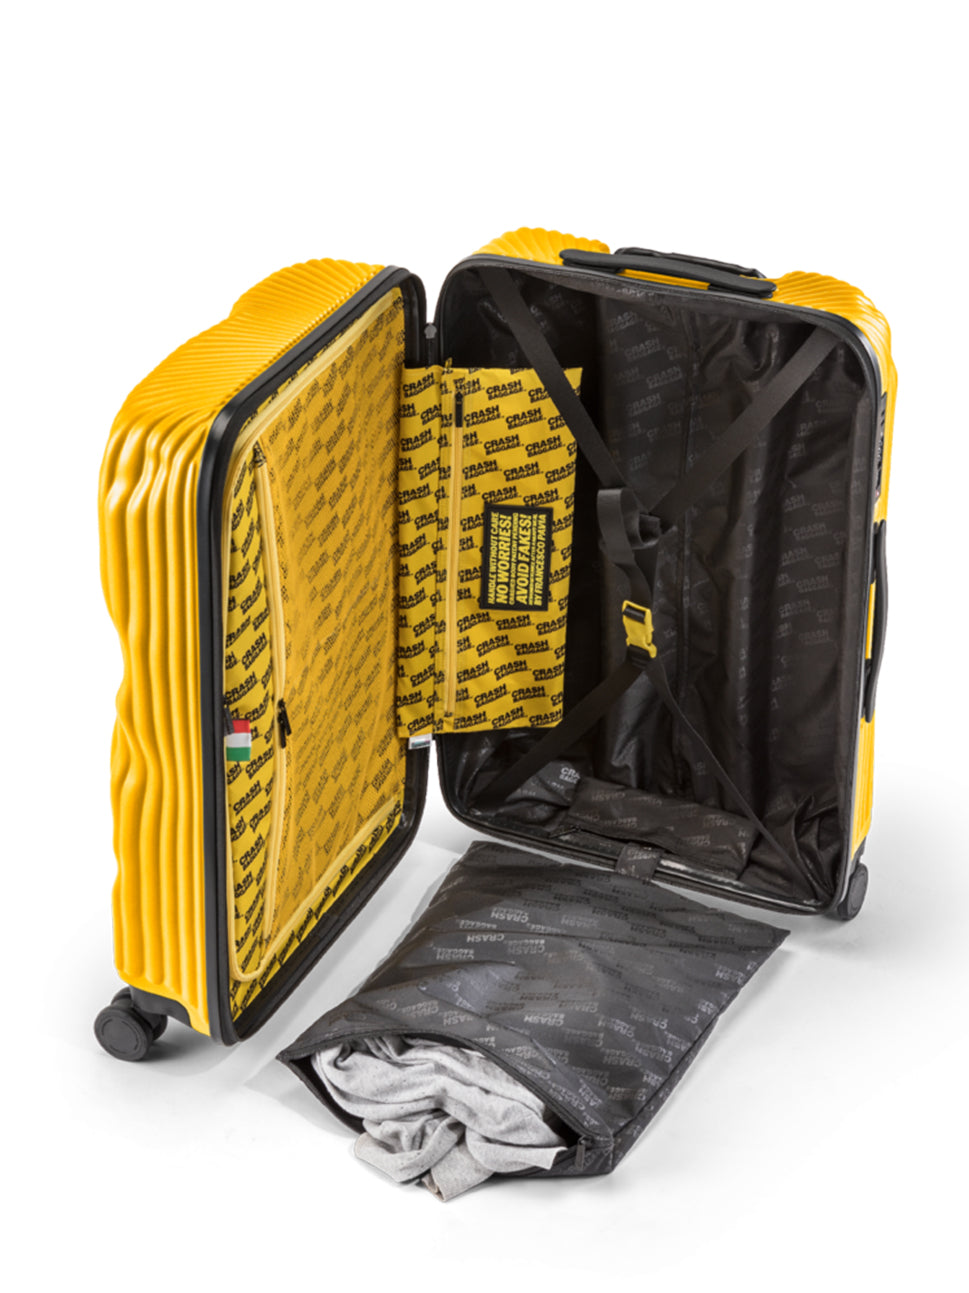 Crash Baggage Stripe 4 Wheel Luggage Trolley Yellow 25" Polycarbonate